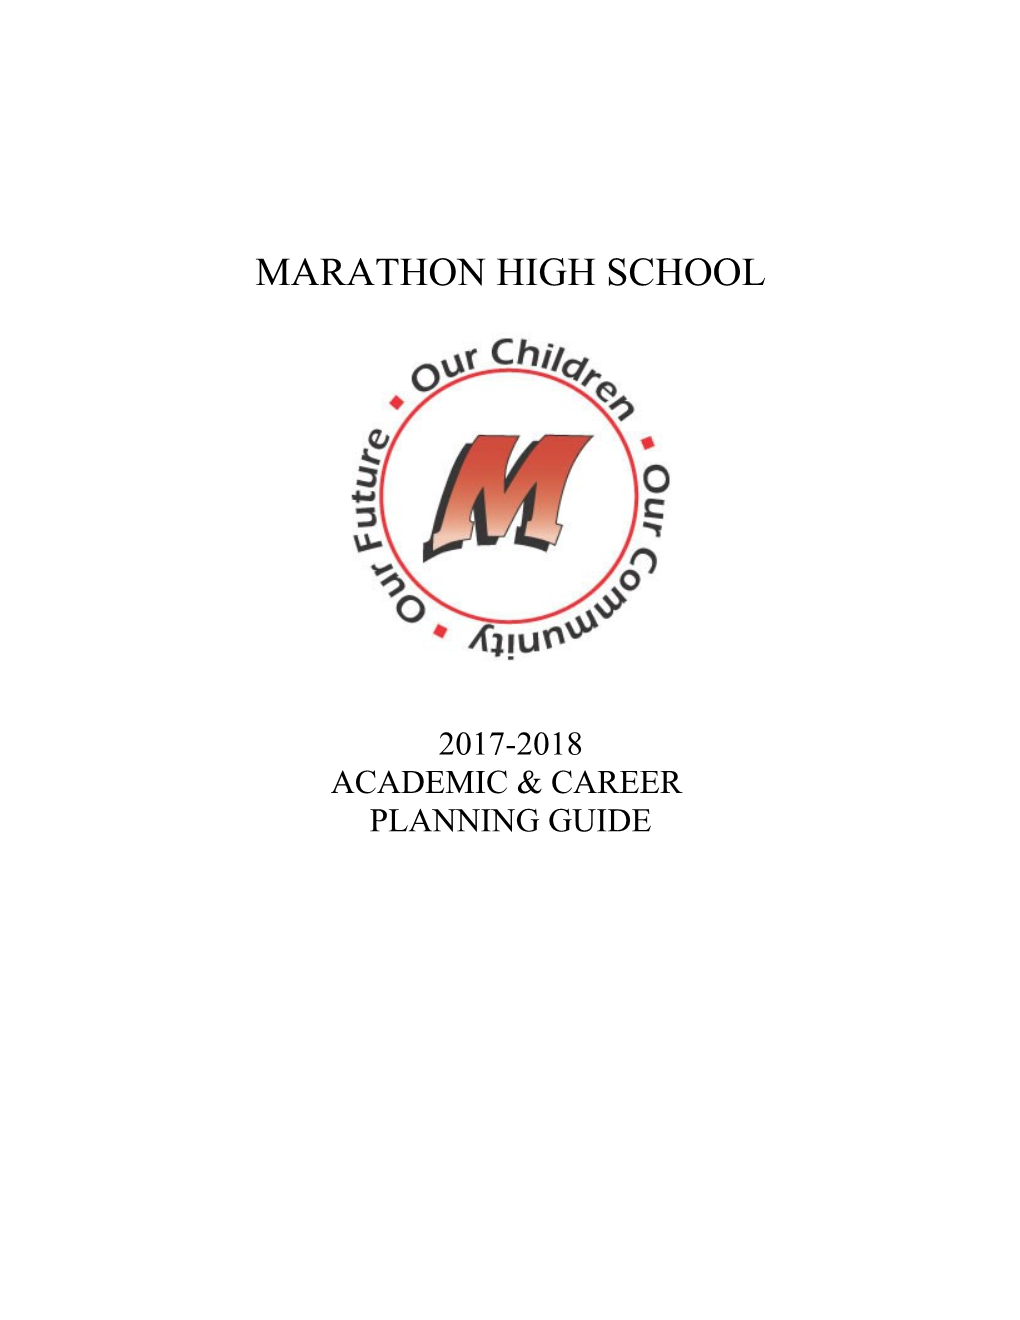 Marathon High School